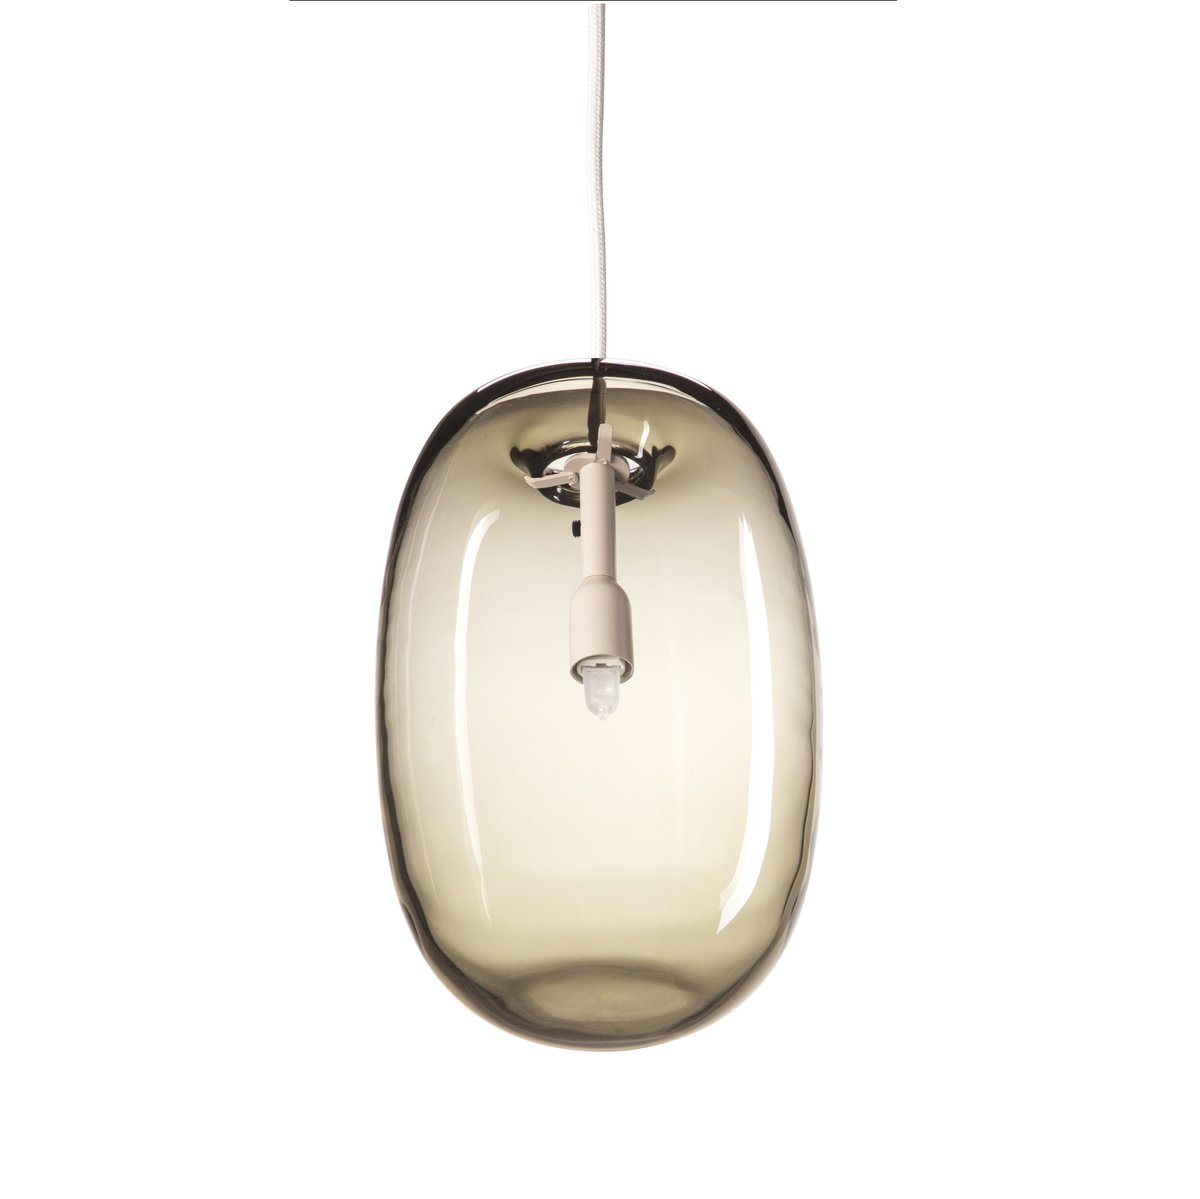 Bilde av Örsjö Belysning Pebble taklampe avlang varmgrå-glass